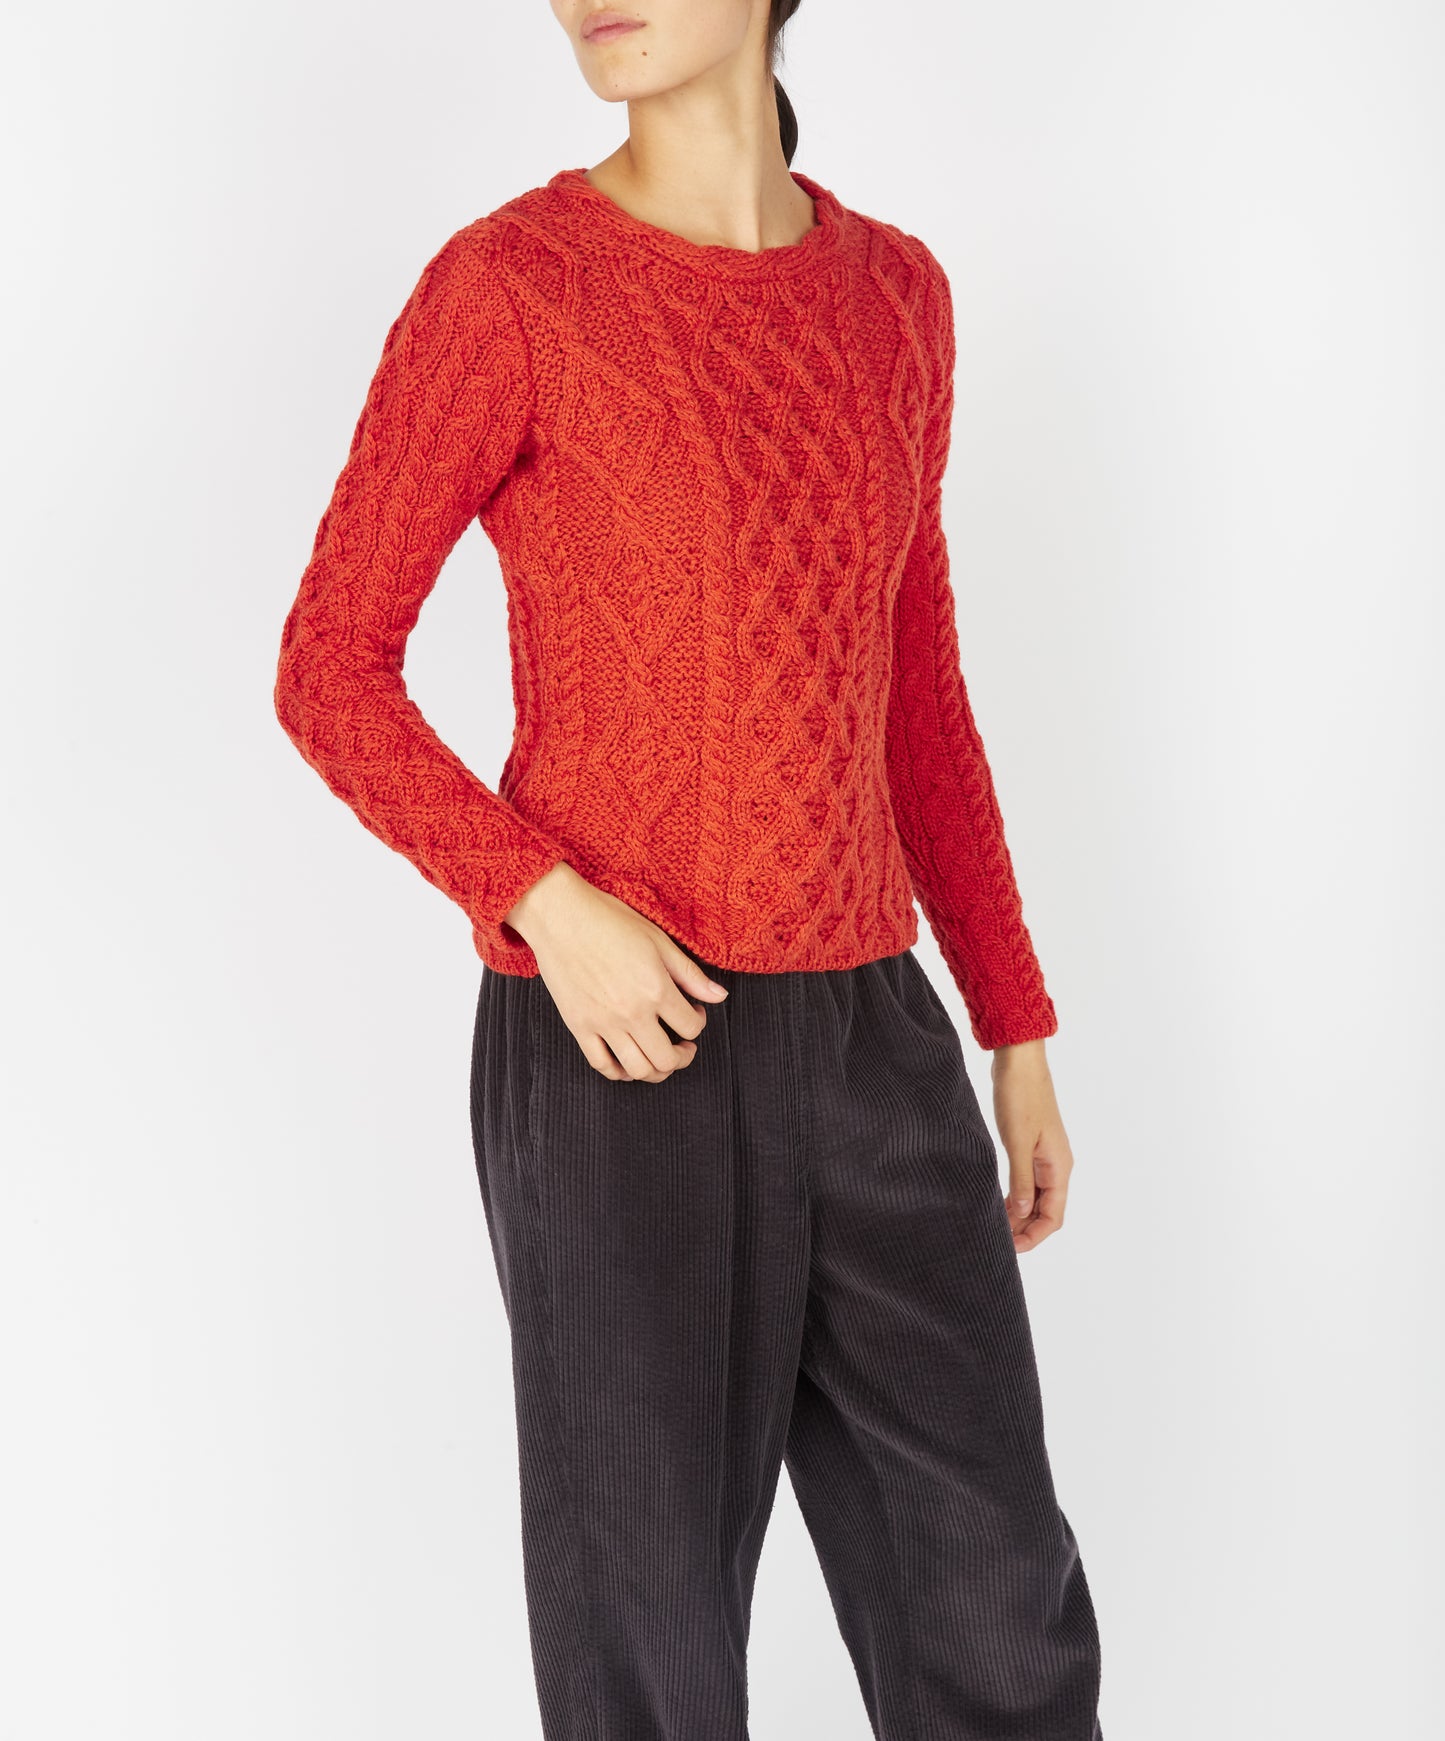 IrelandsEye Knitwear Lambay Lattice Cable Aran Sweater Orange Marl